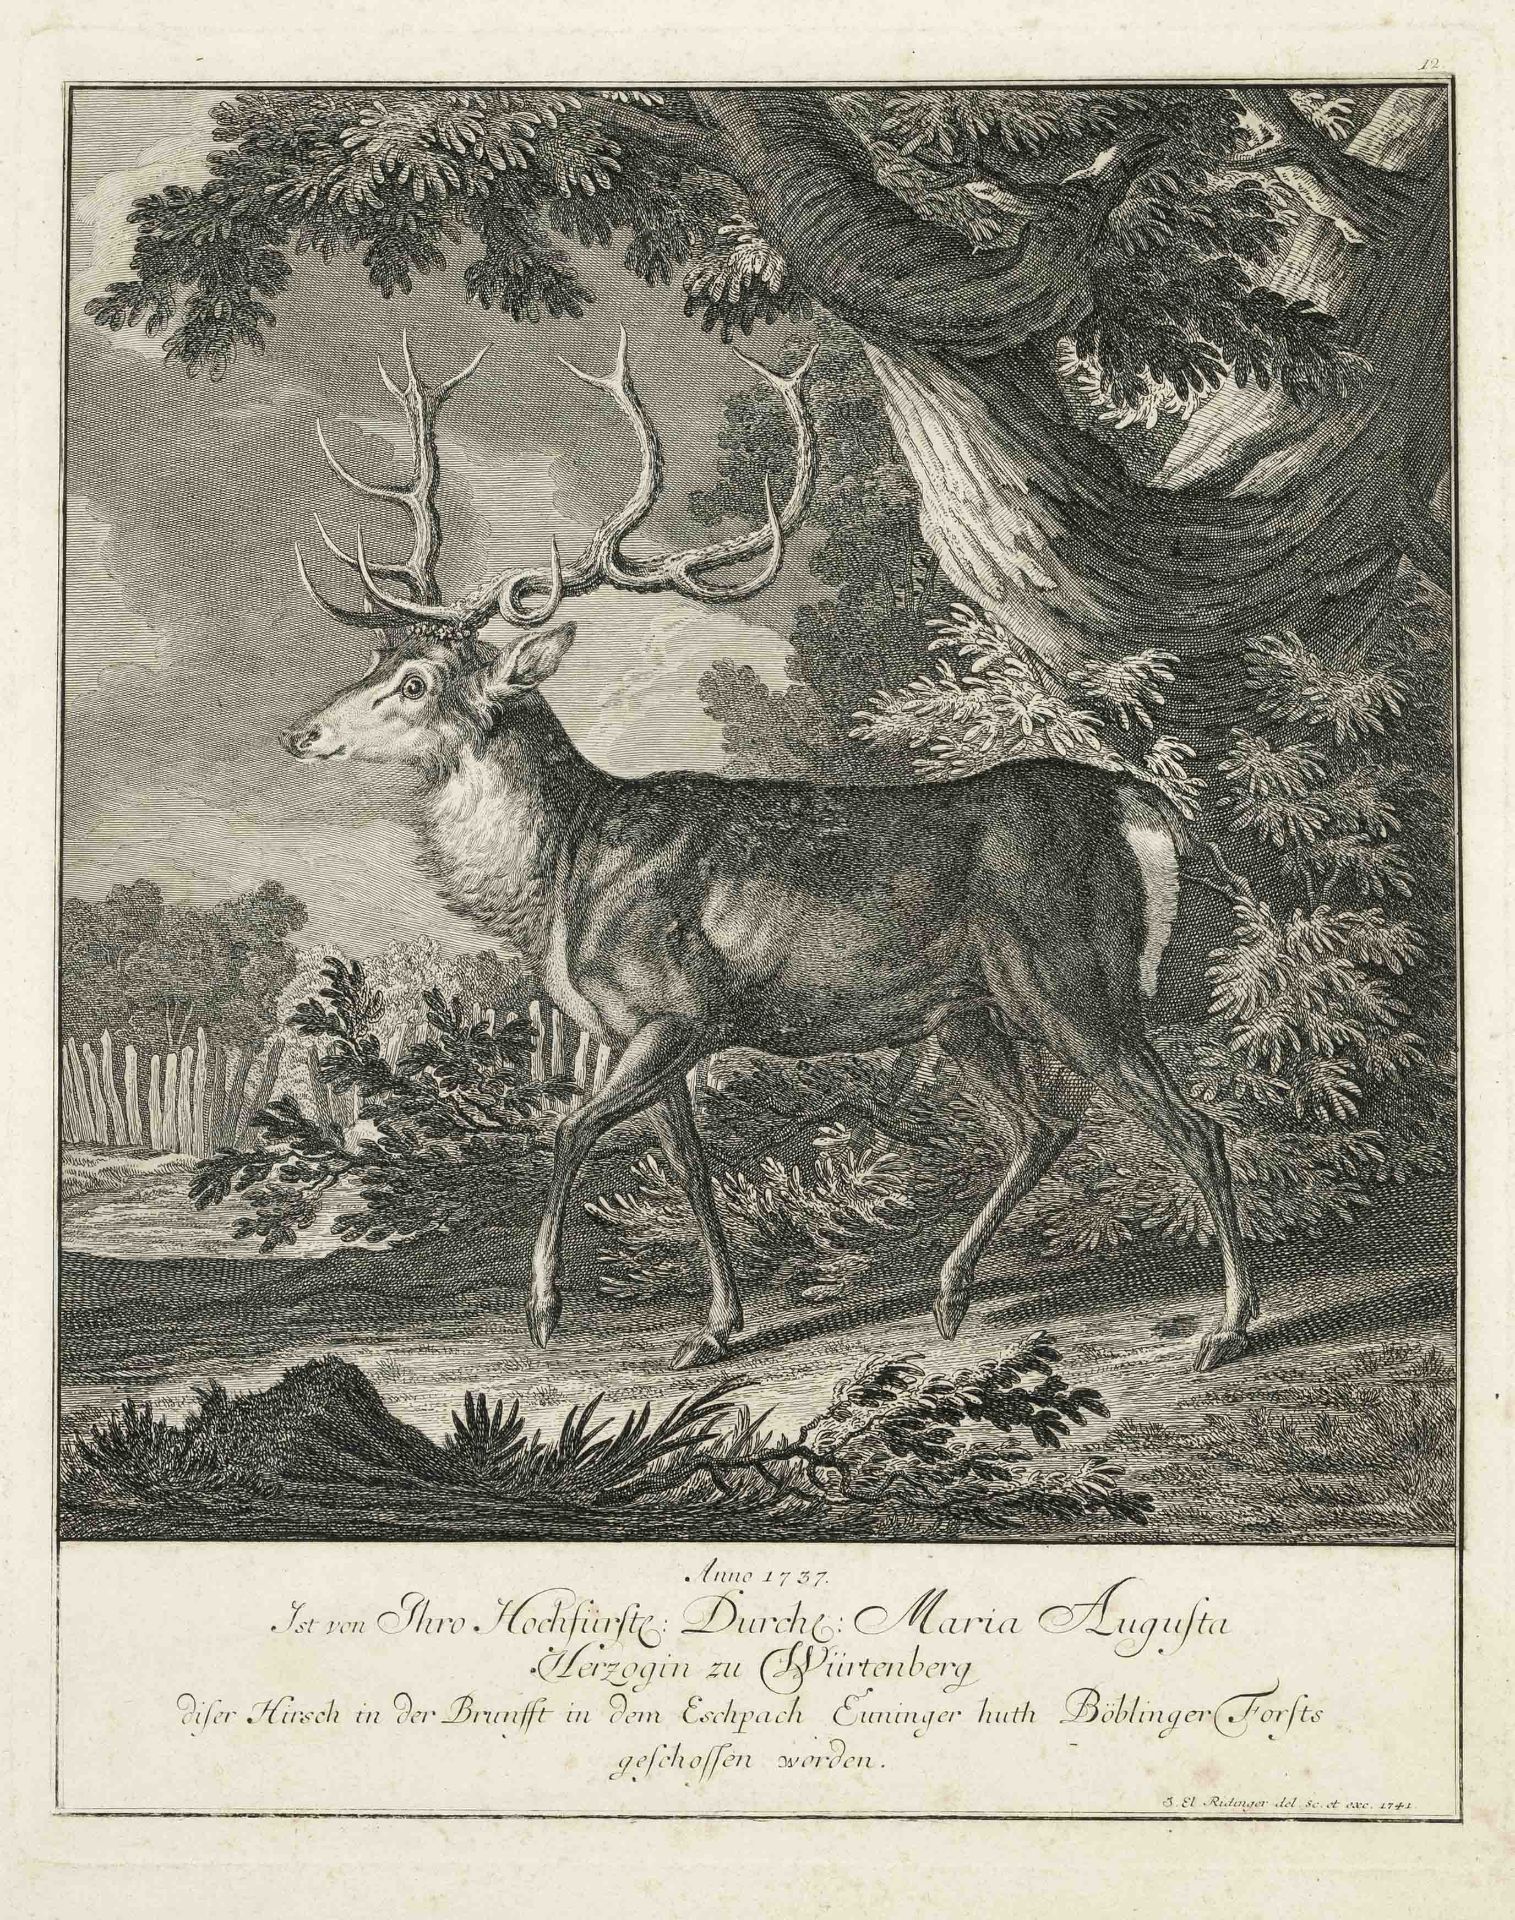 Johann Elias Ridinger (1698-17